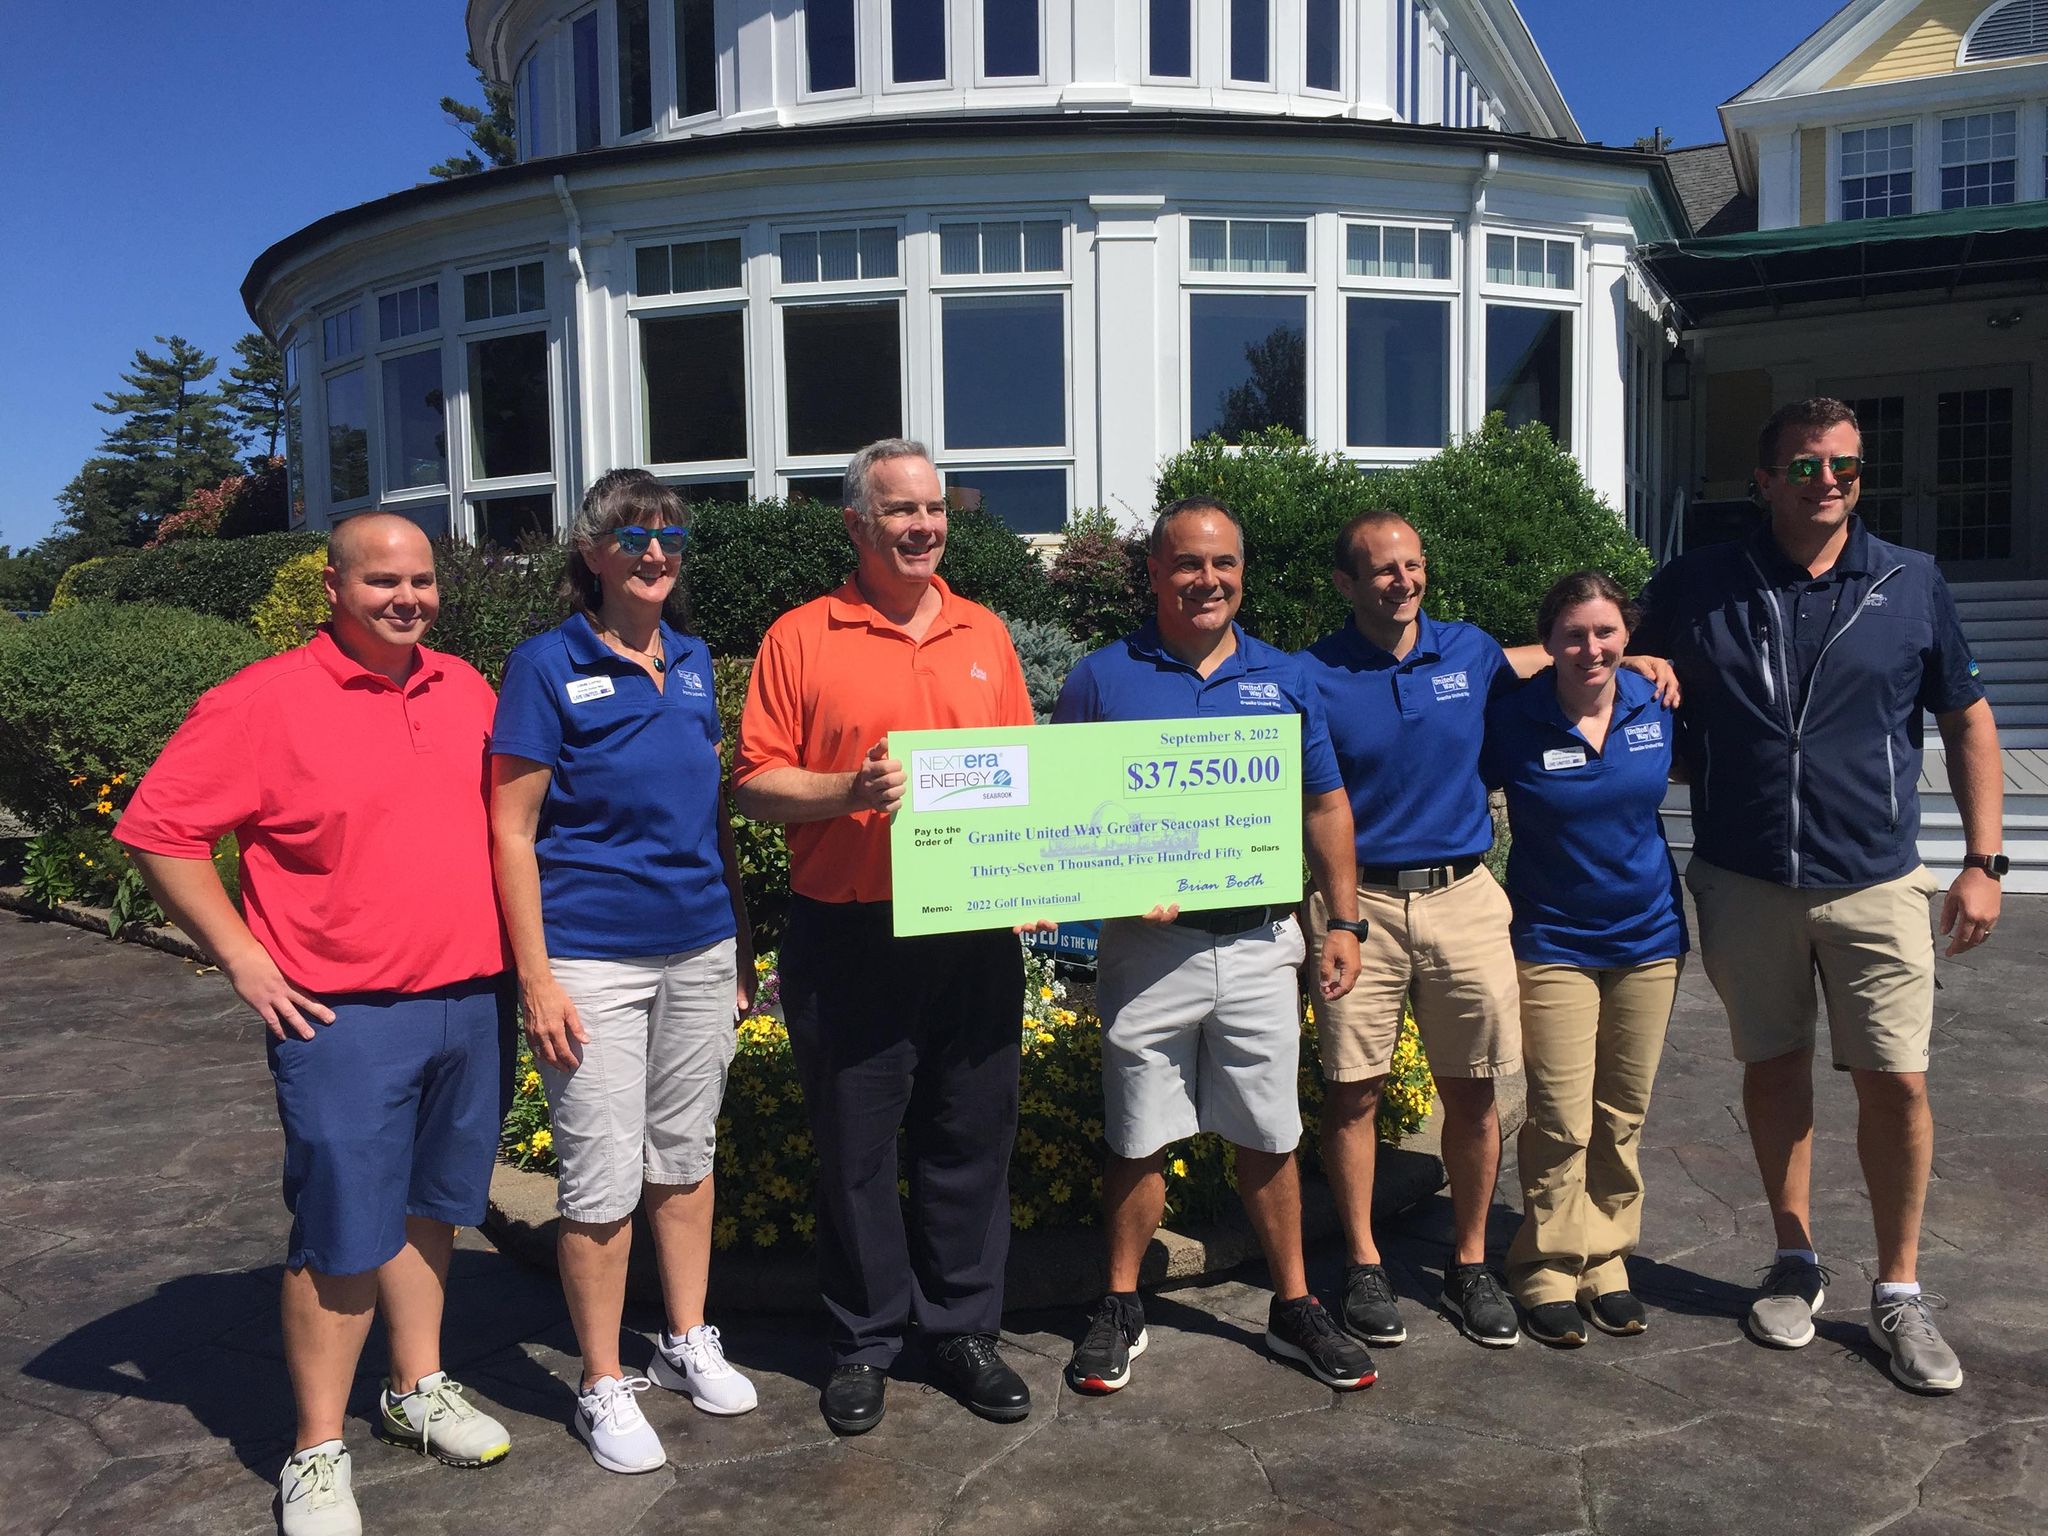 NextEra Energy Hosts Golf Tournament to benefit Granite United Way